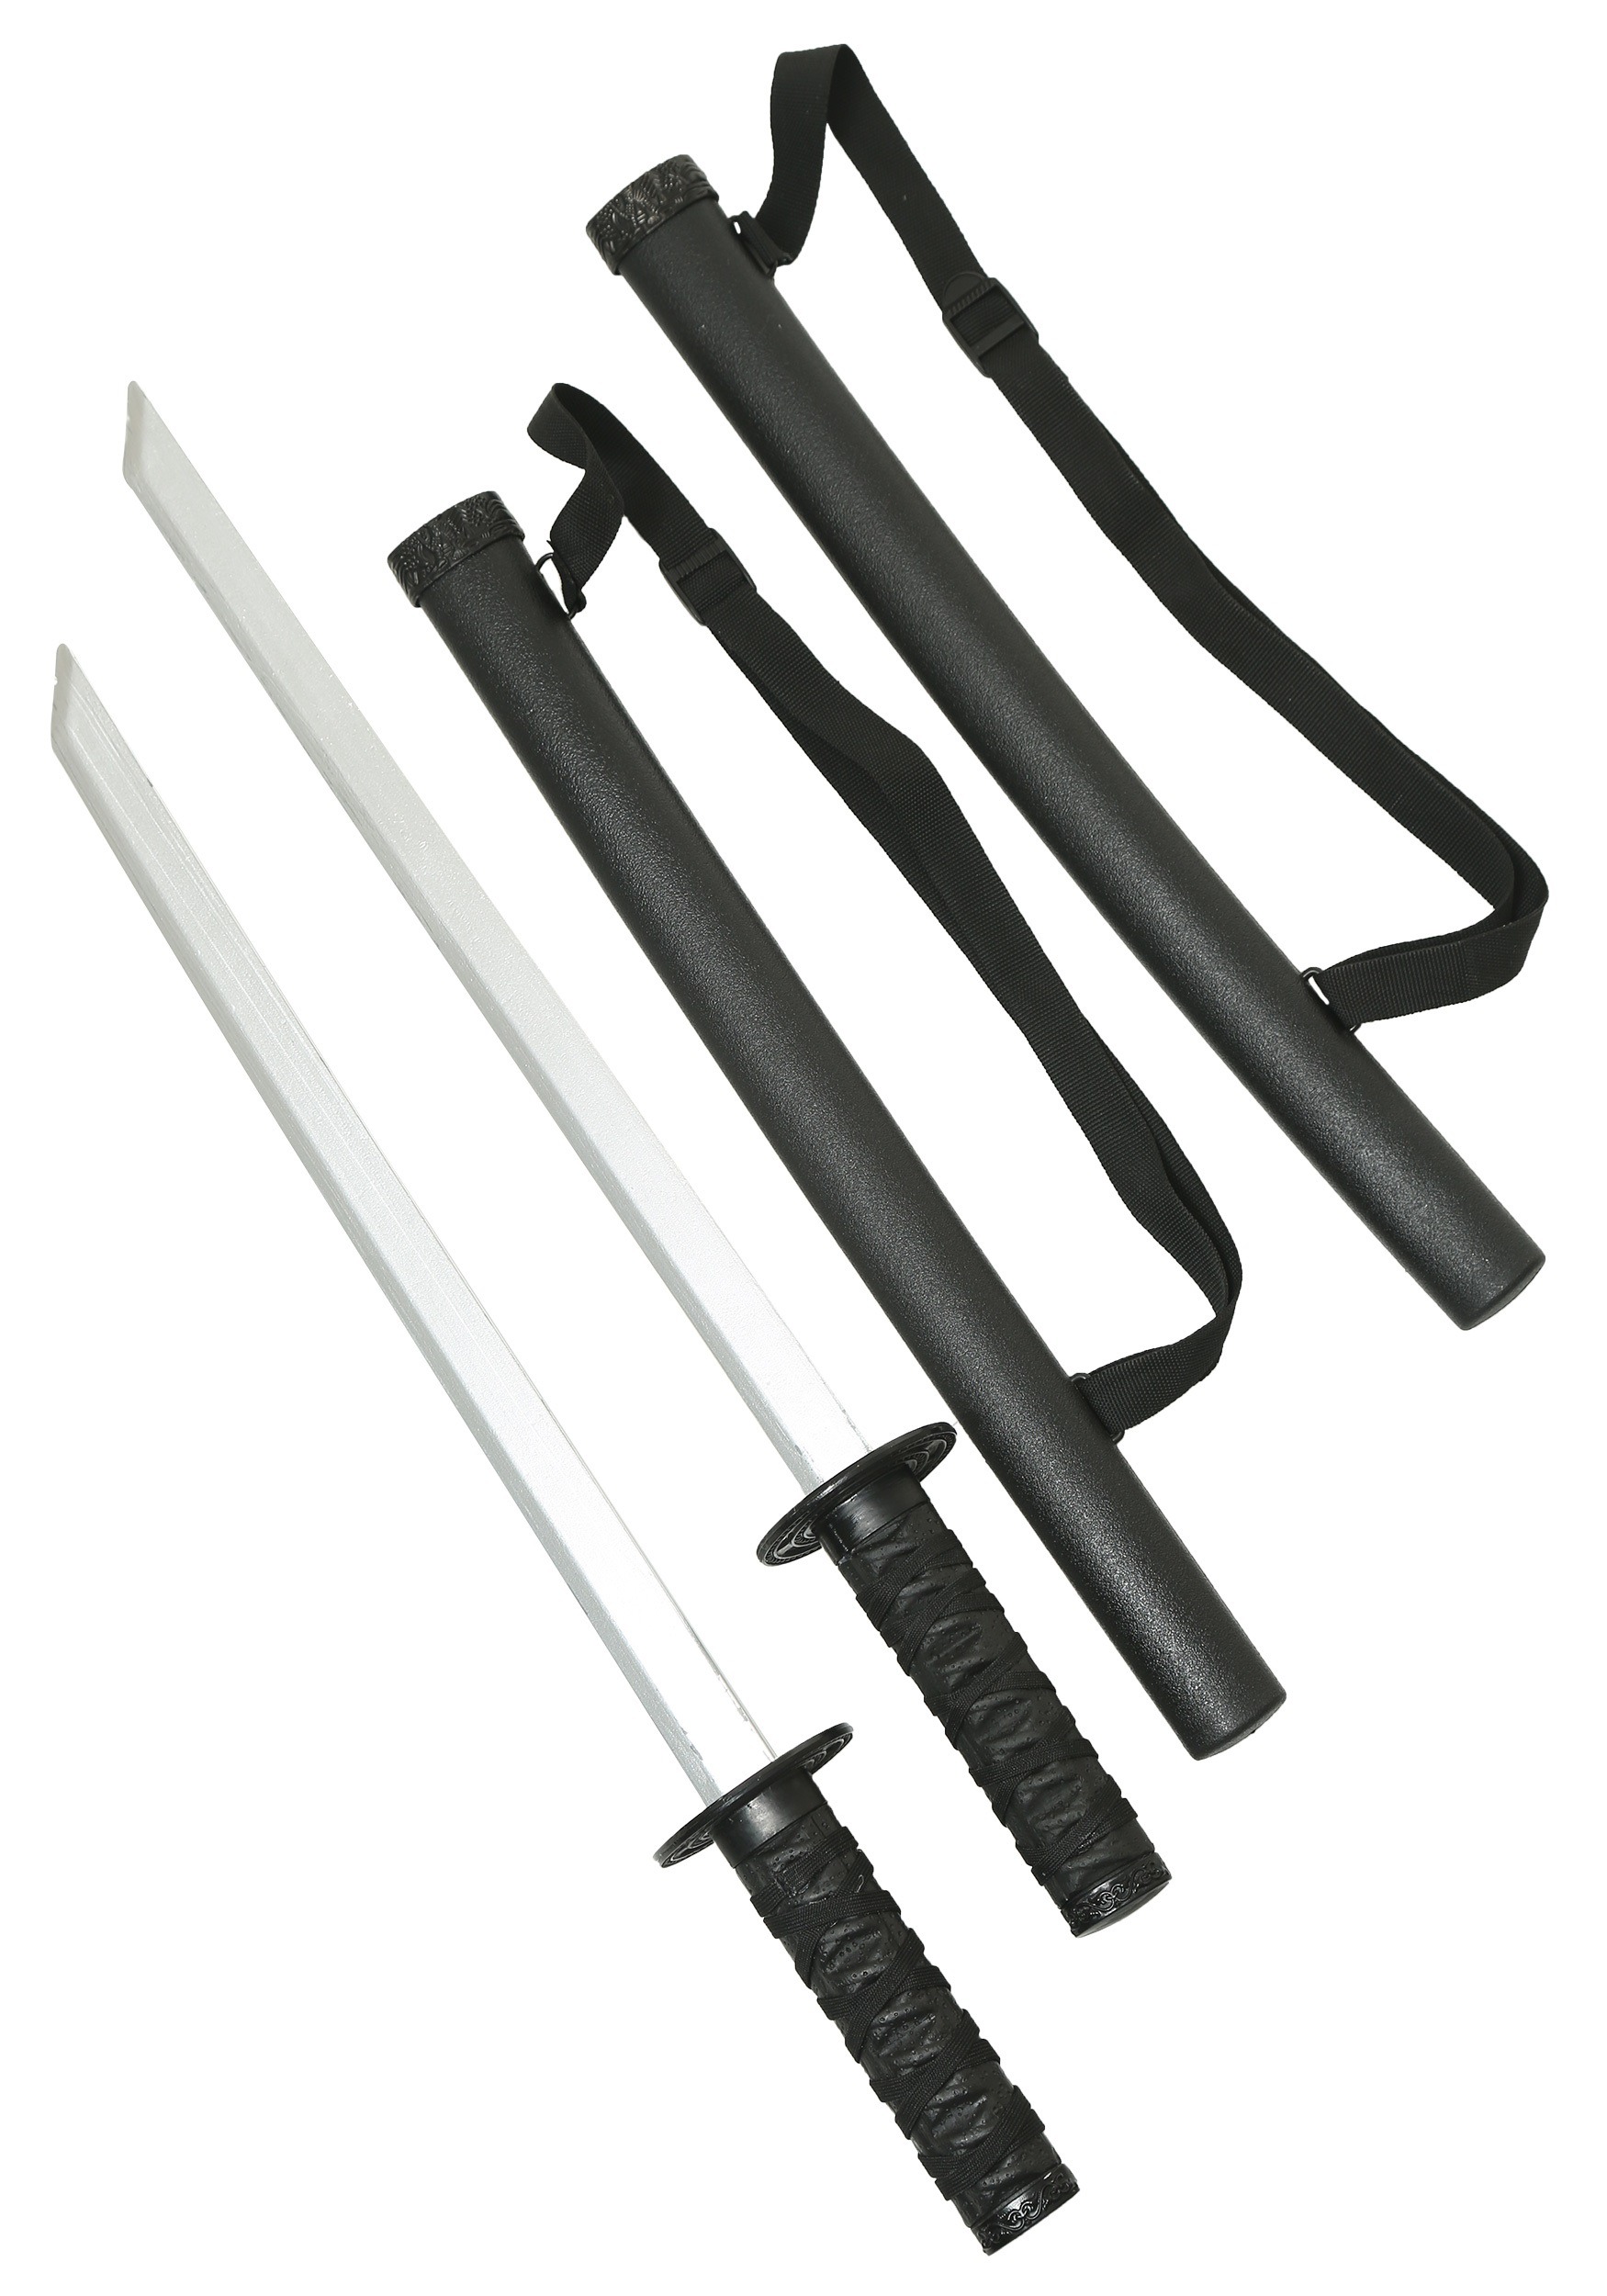 Ninja Two Sword Set